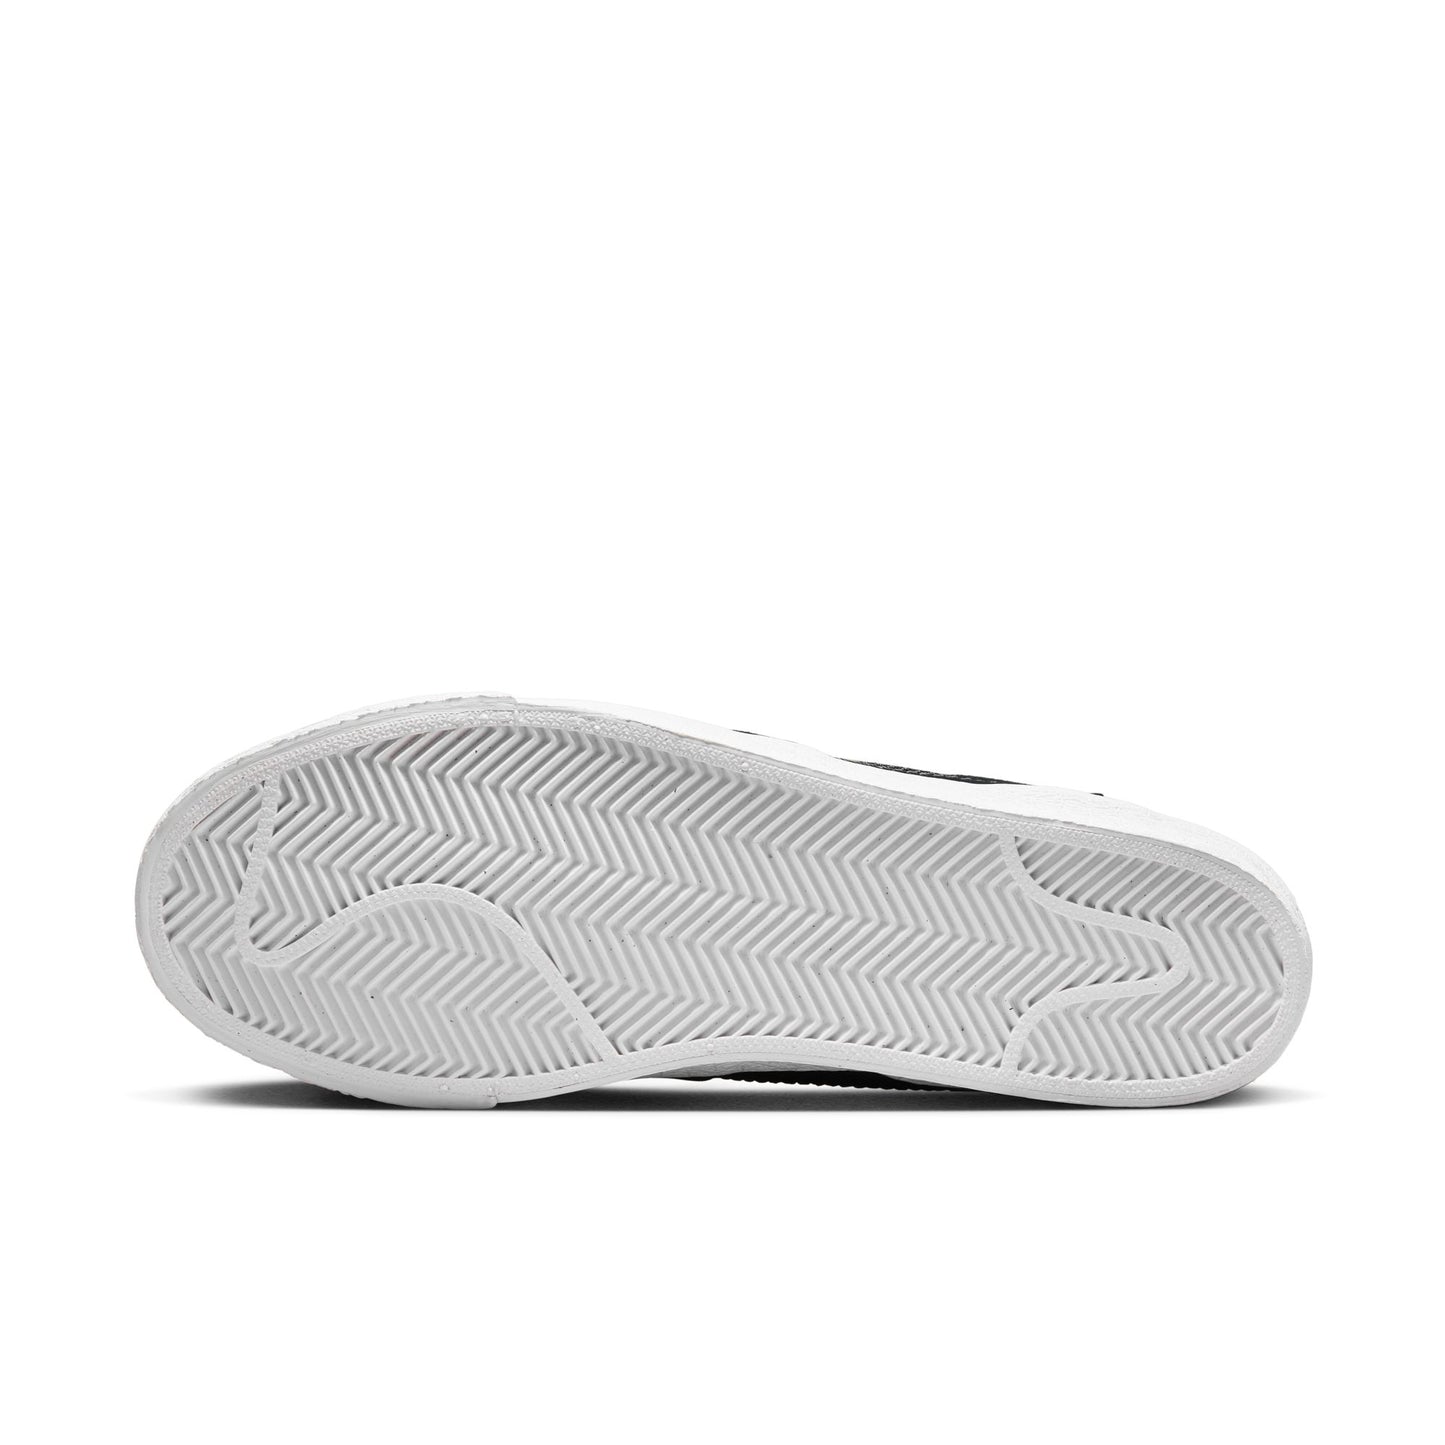 Nike SB Blazer Mid Premium black anthracite black white